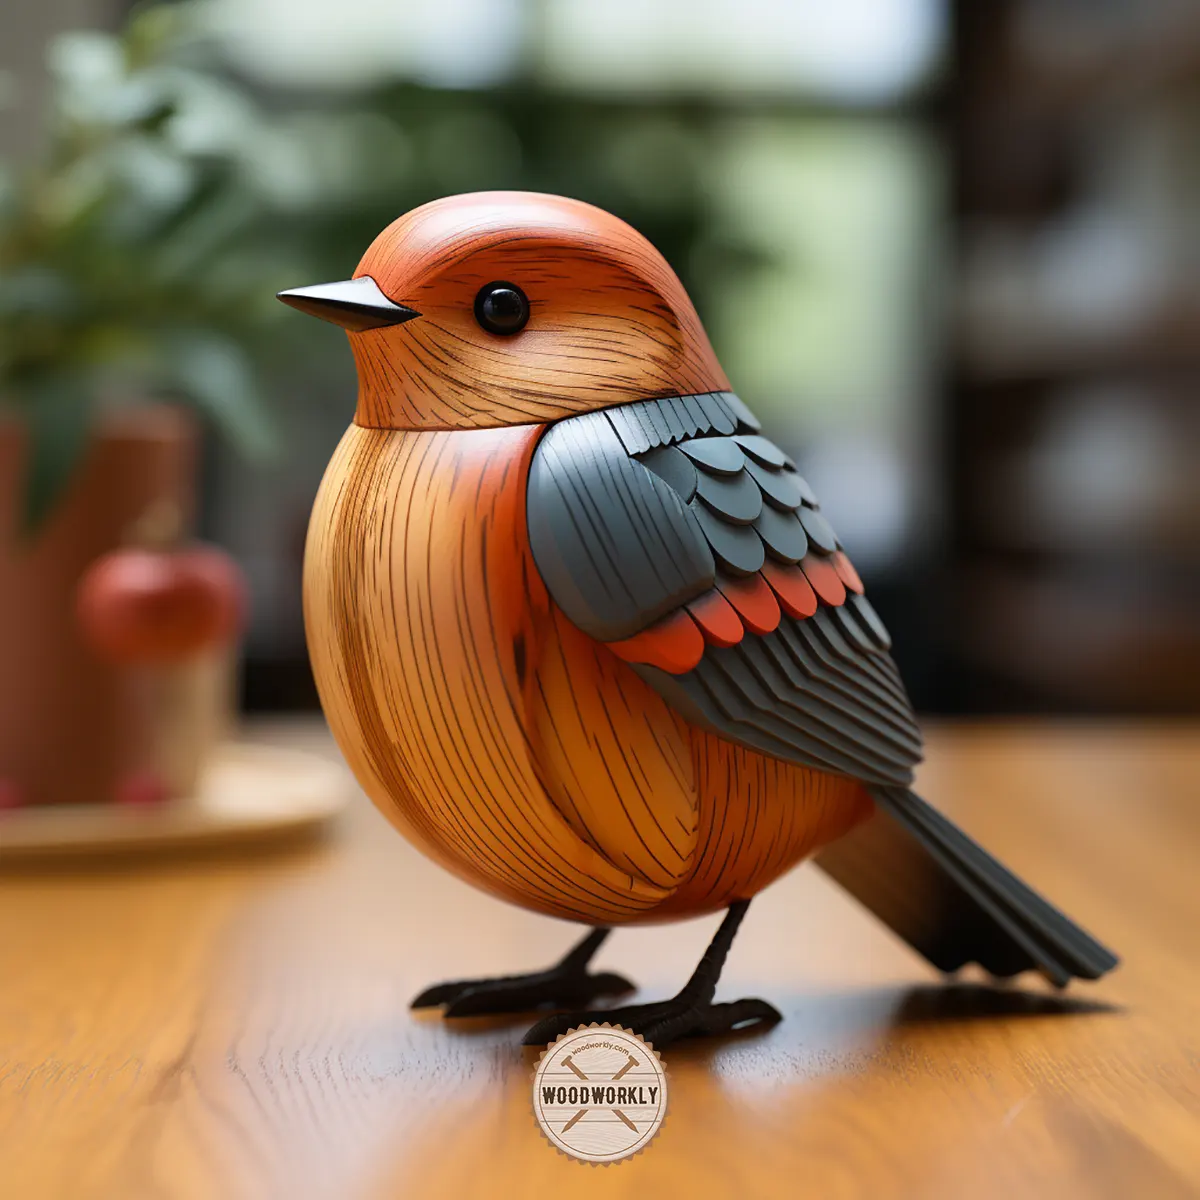 Oak wood carved bird